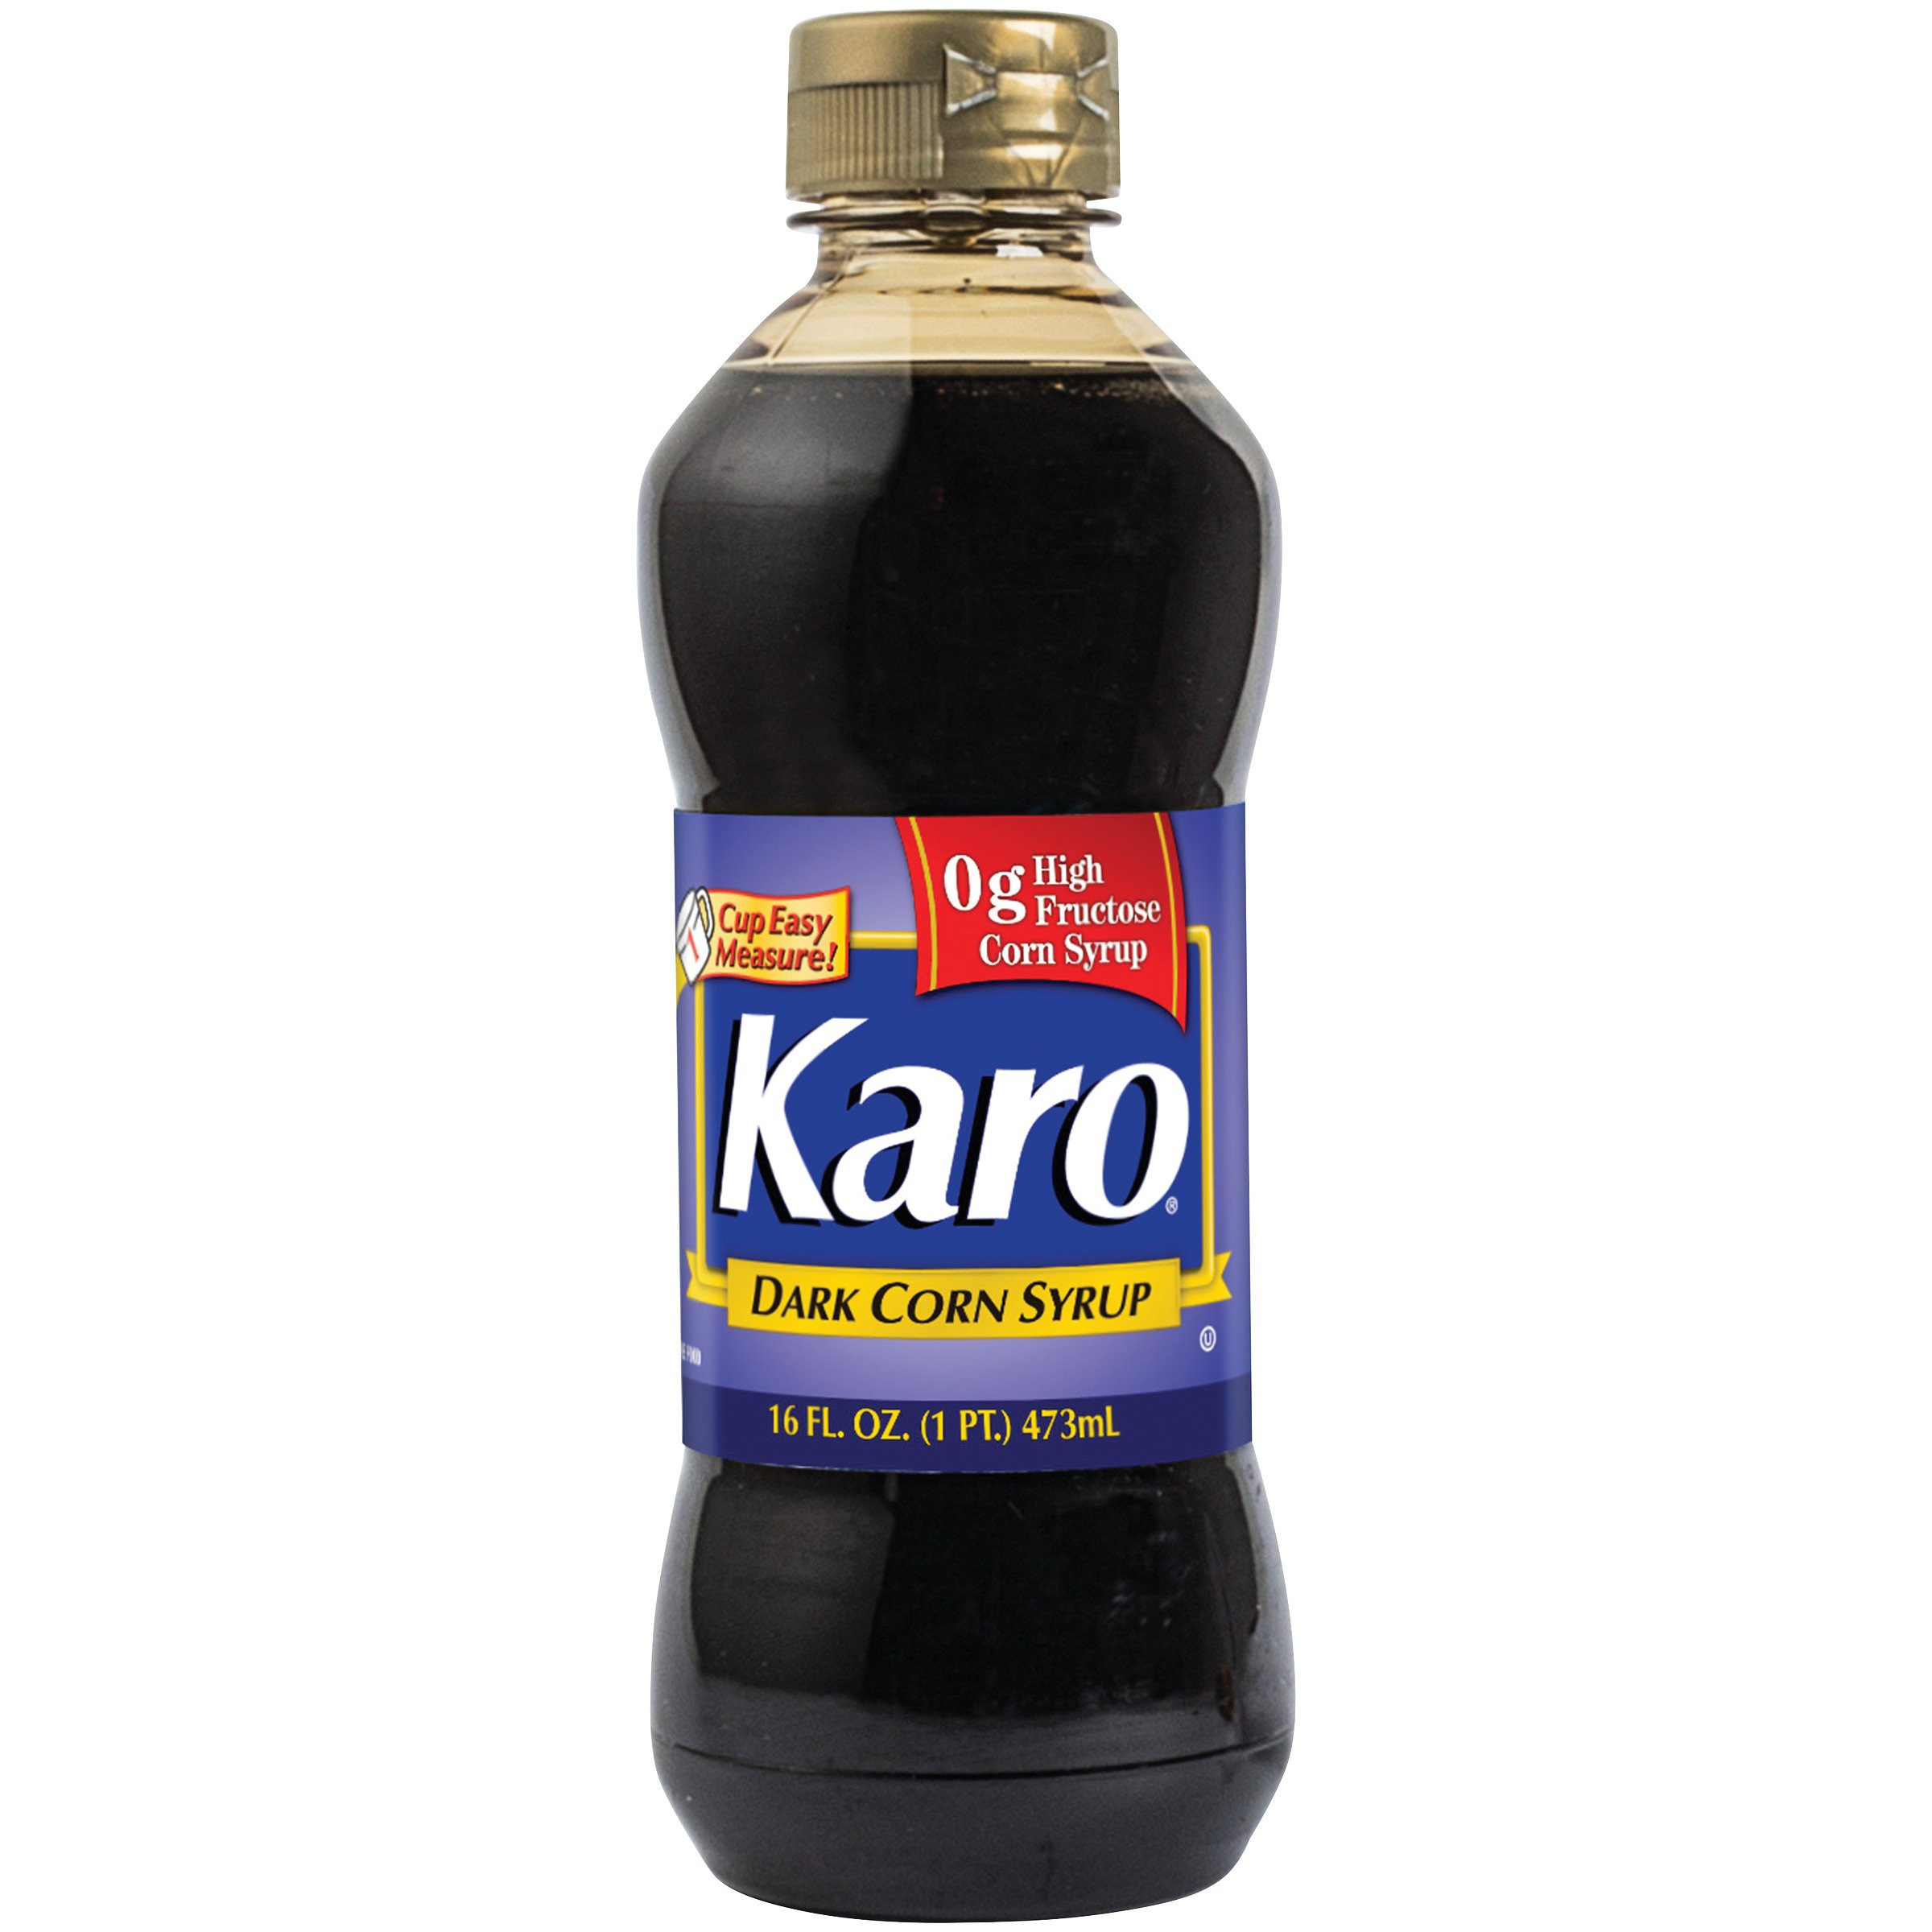 Karo Dark Corn Syrup Shop Sugar At H E B